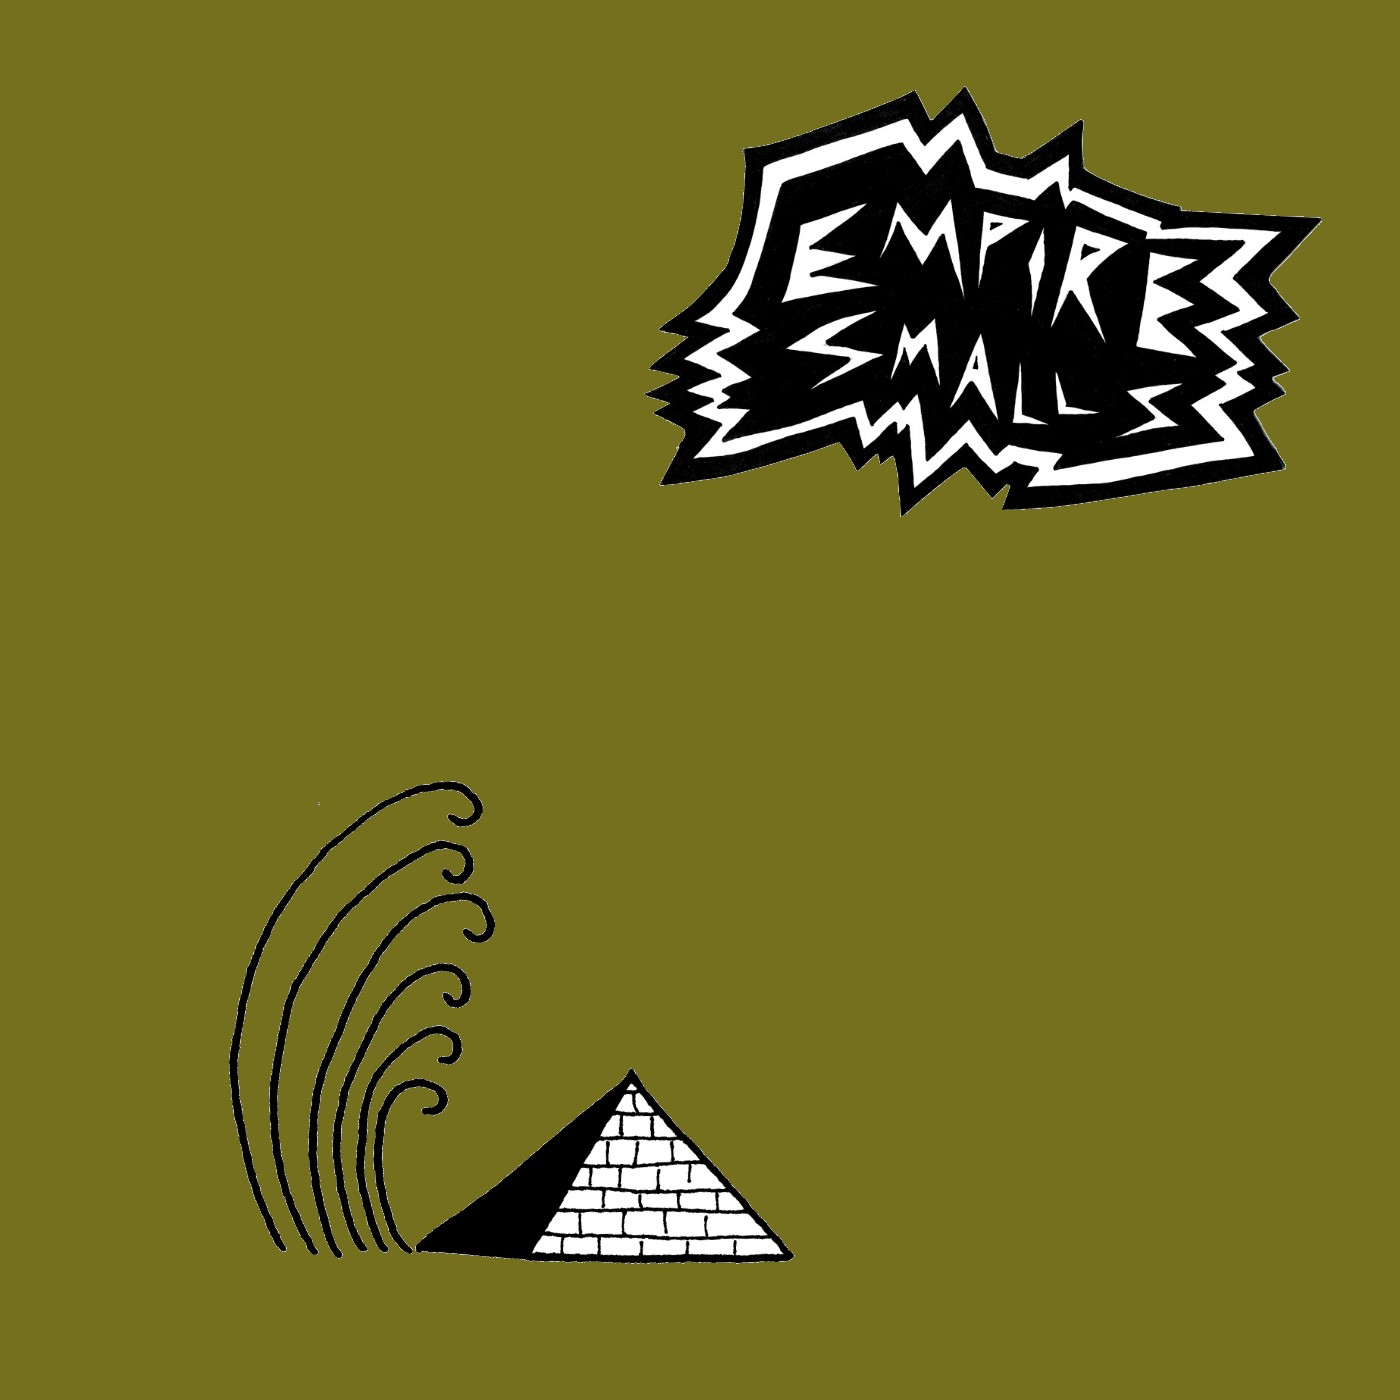 Empire Smalls - Pyramid Wave